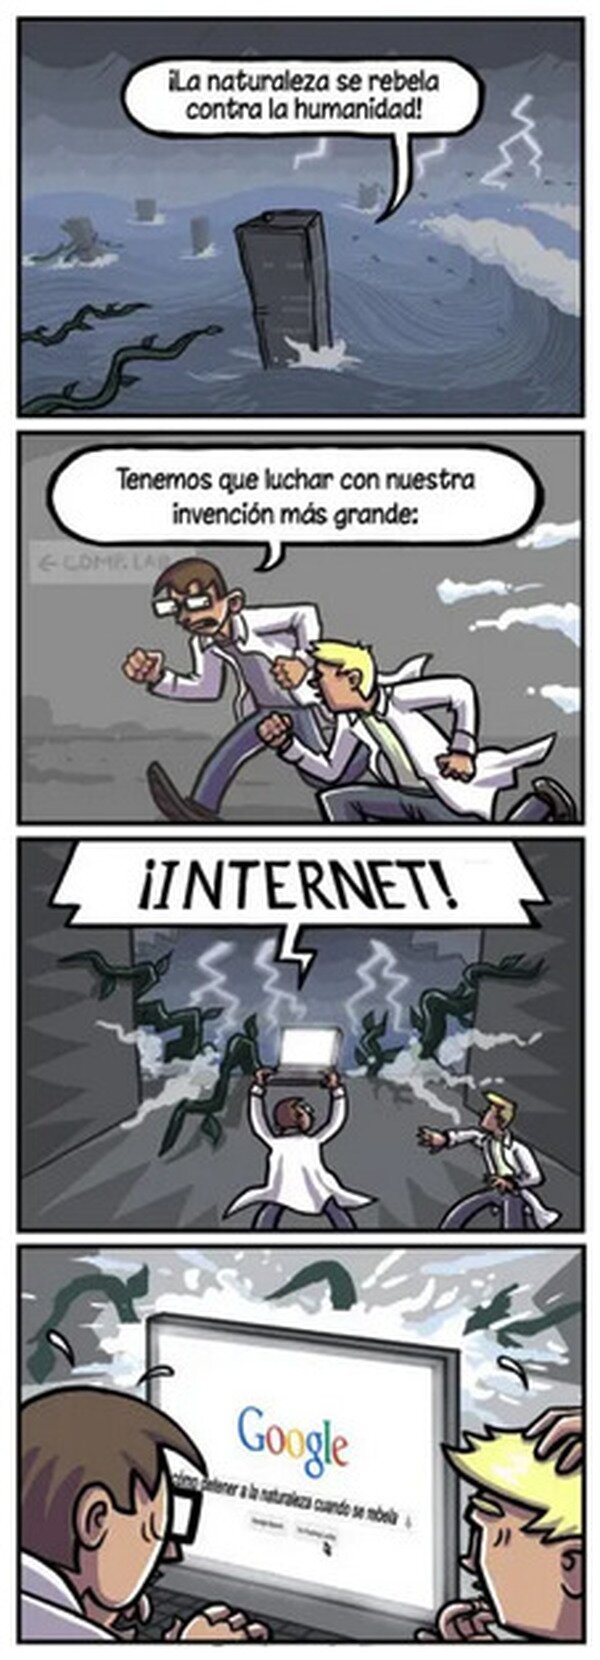 Meme_otros - ¡Internet nos ayudará!